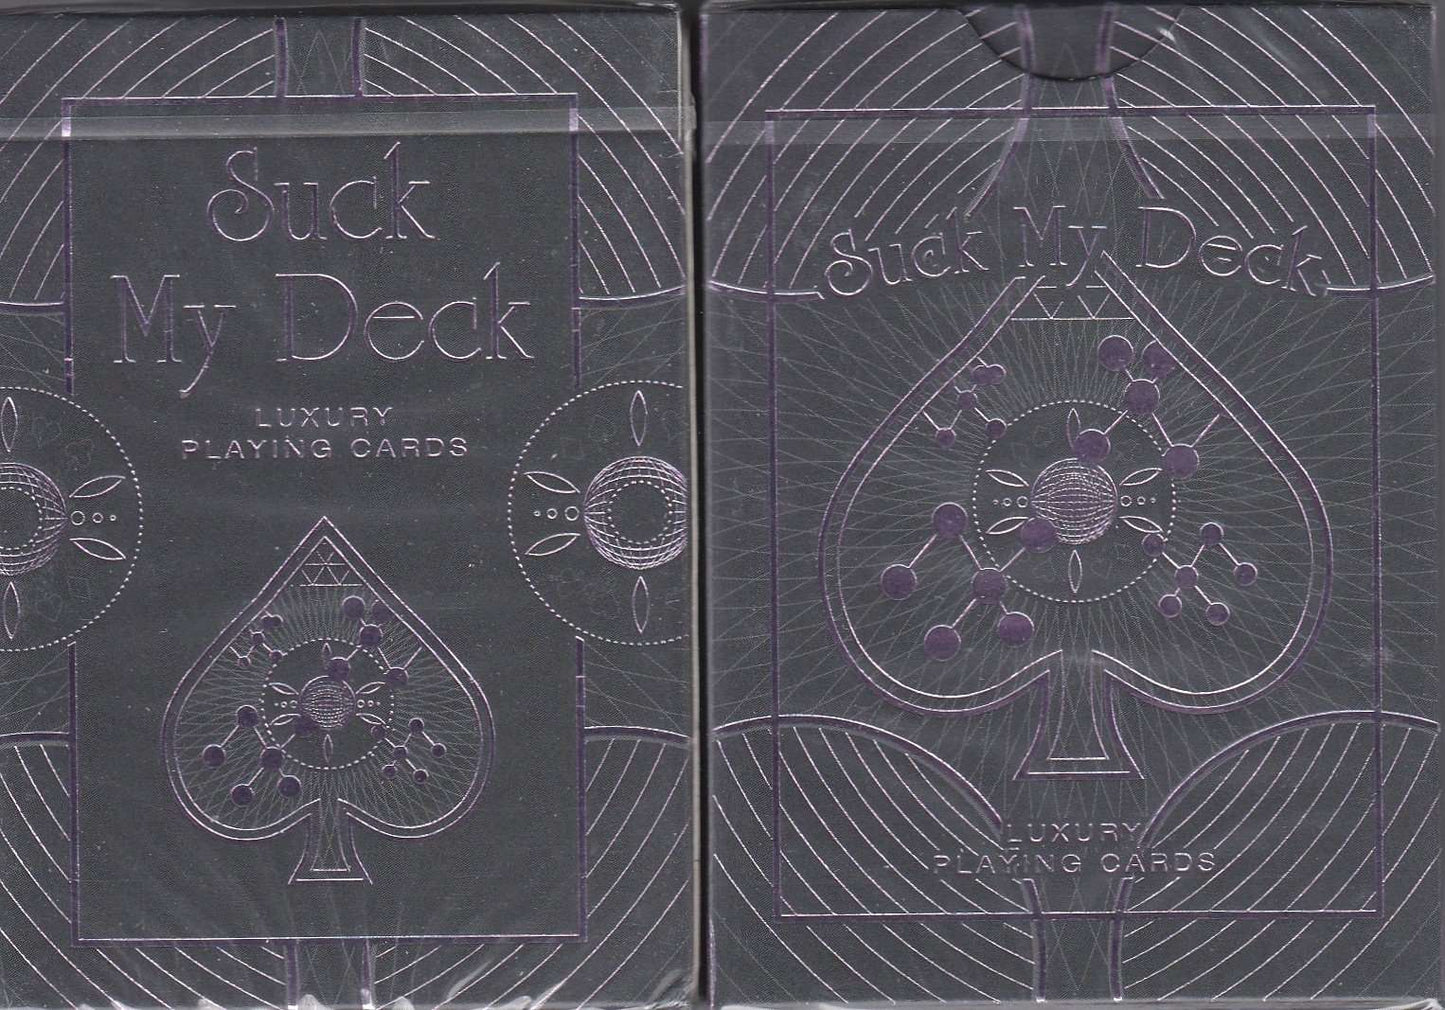 PlayingCardDecks.com-Suck My Deck Playing Cards